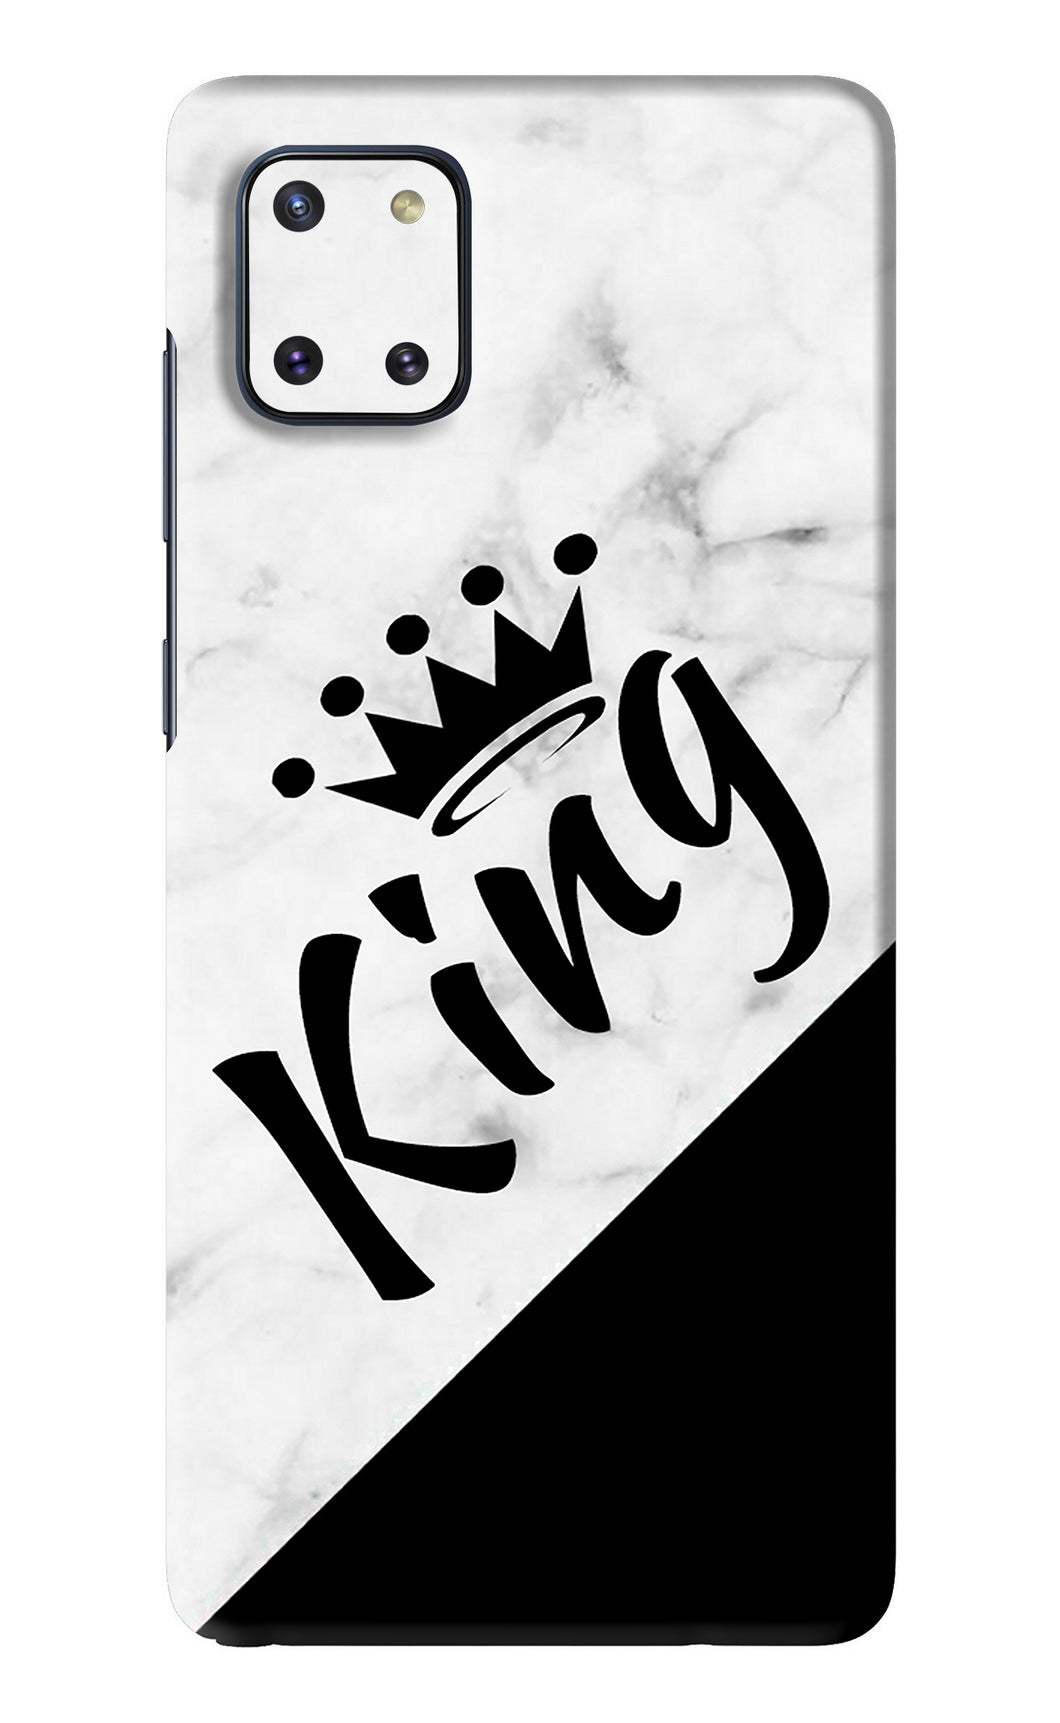 King Samsung Galaxy Note 10 Lite Back Skin Wrap